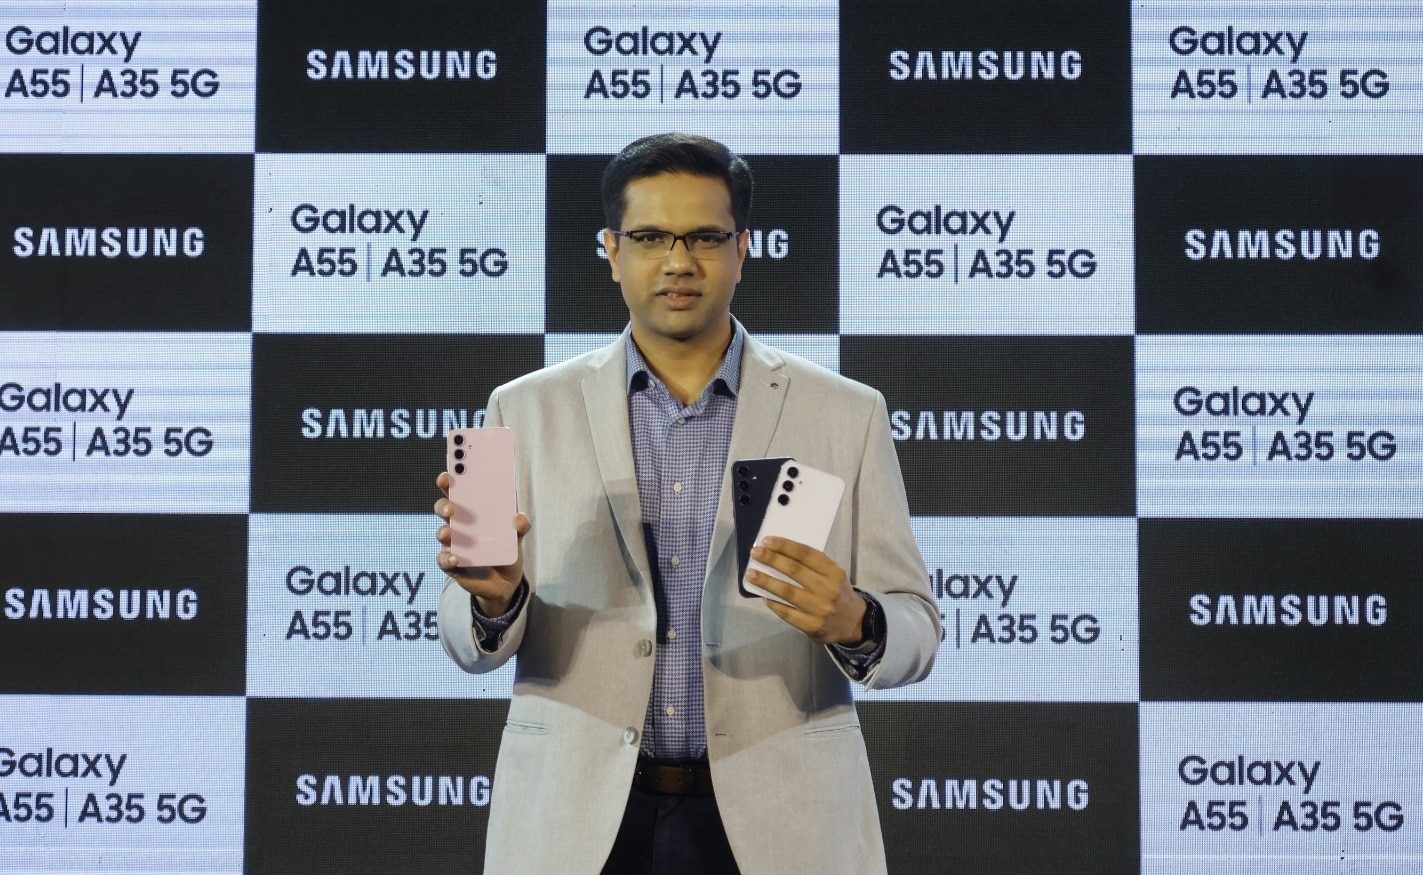 Galaxy A55 5G এবং A35 SG ফ্ল্যাগশিপ সকল গ্রাহকের কাছে পৌঁছে দেওয়াই আমাদের লক্ষ্য’। Galaxy A55 5G এবং A35 5G স্মার্টফোন দেশের দ্রুত বৃদ্ধি পাওয়া মিড সেগমেন্টে (৩০ হাজার টাকা থেকে ৫০ হাজার টাকা) Samsung-কে আরও শক্তিশালী করবে বলে মনে করেন অক্ষয় রাও। 